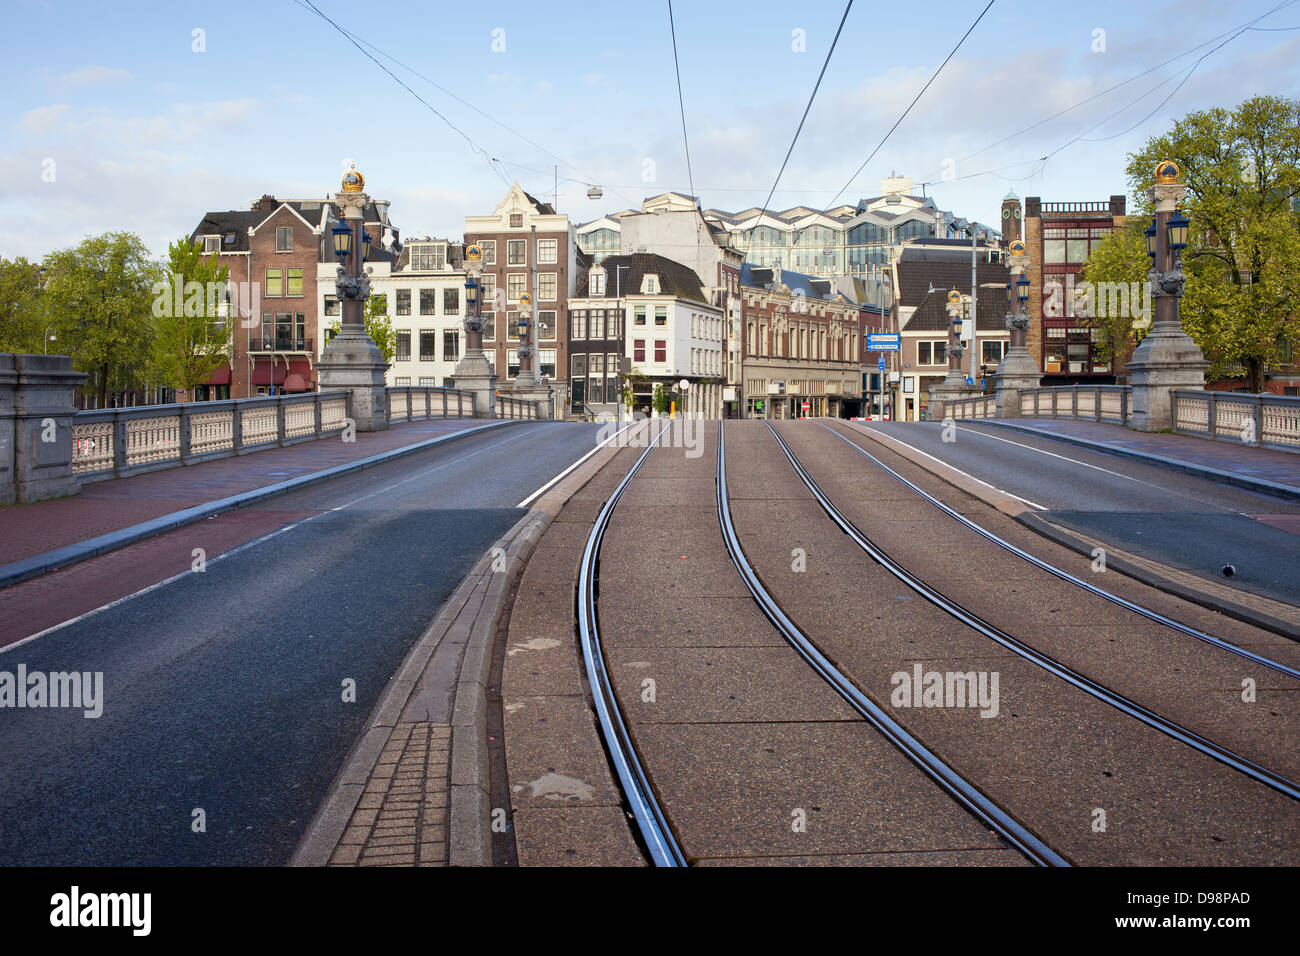 Des infrastructures de transport dans la ville d'Amsterdam en Hollande, street et tramway sur le pont (Hogesluis Hoge Brug Sluis). Banque D'Images